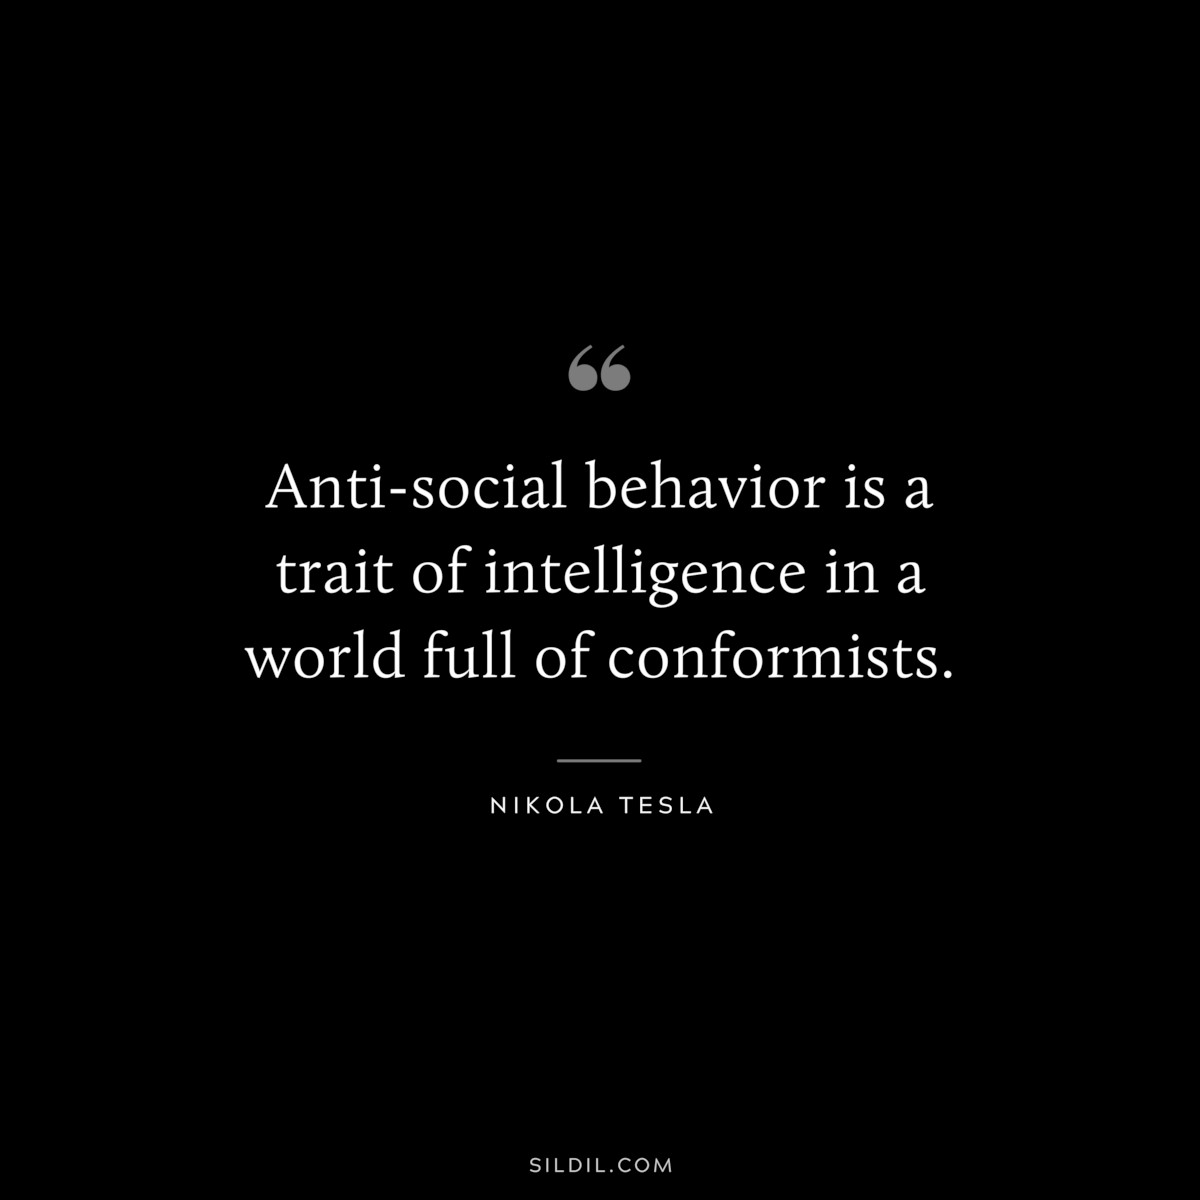 Anti-social behavior is a trait of intelligence in a world full of conformists. ― Nikola Tesla